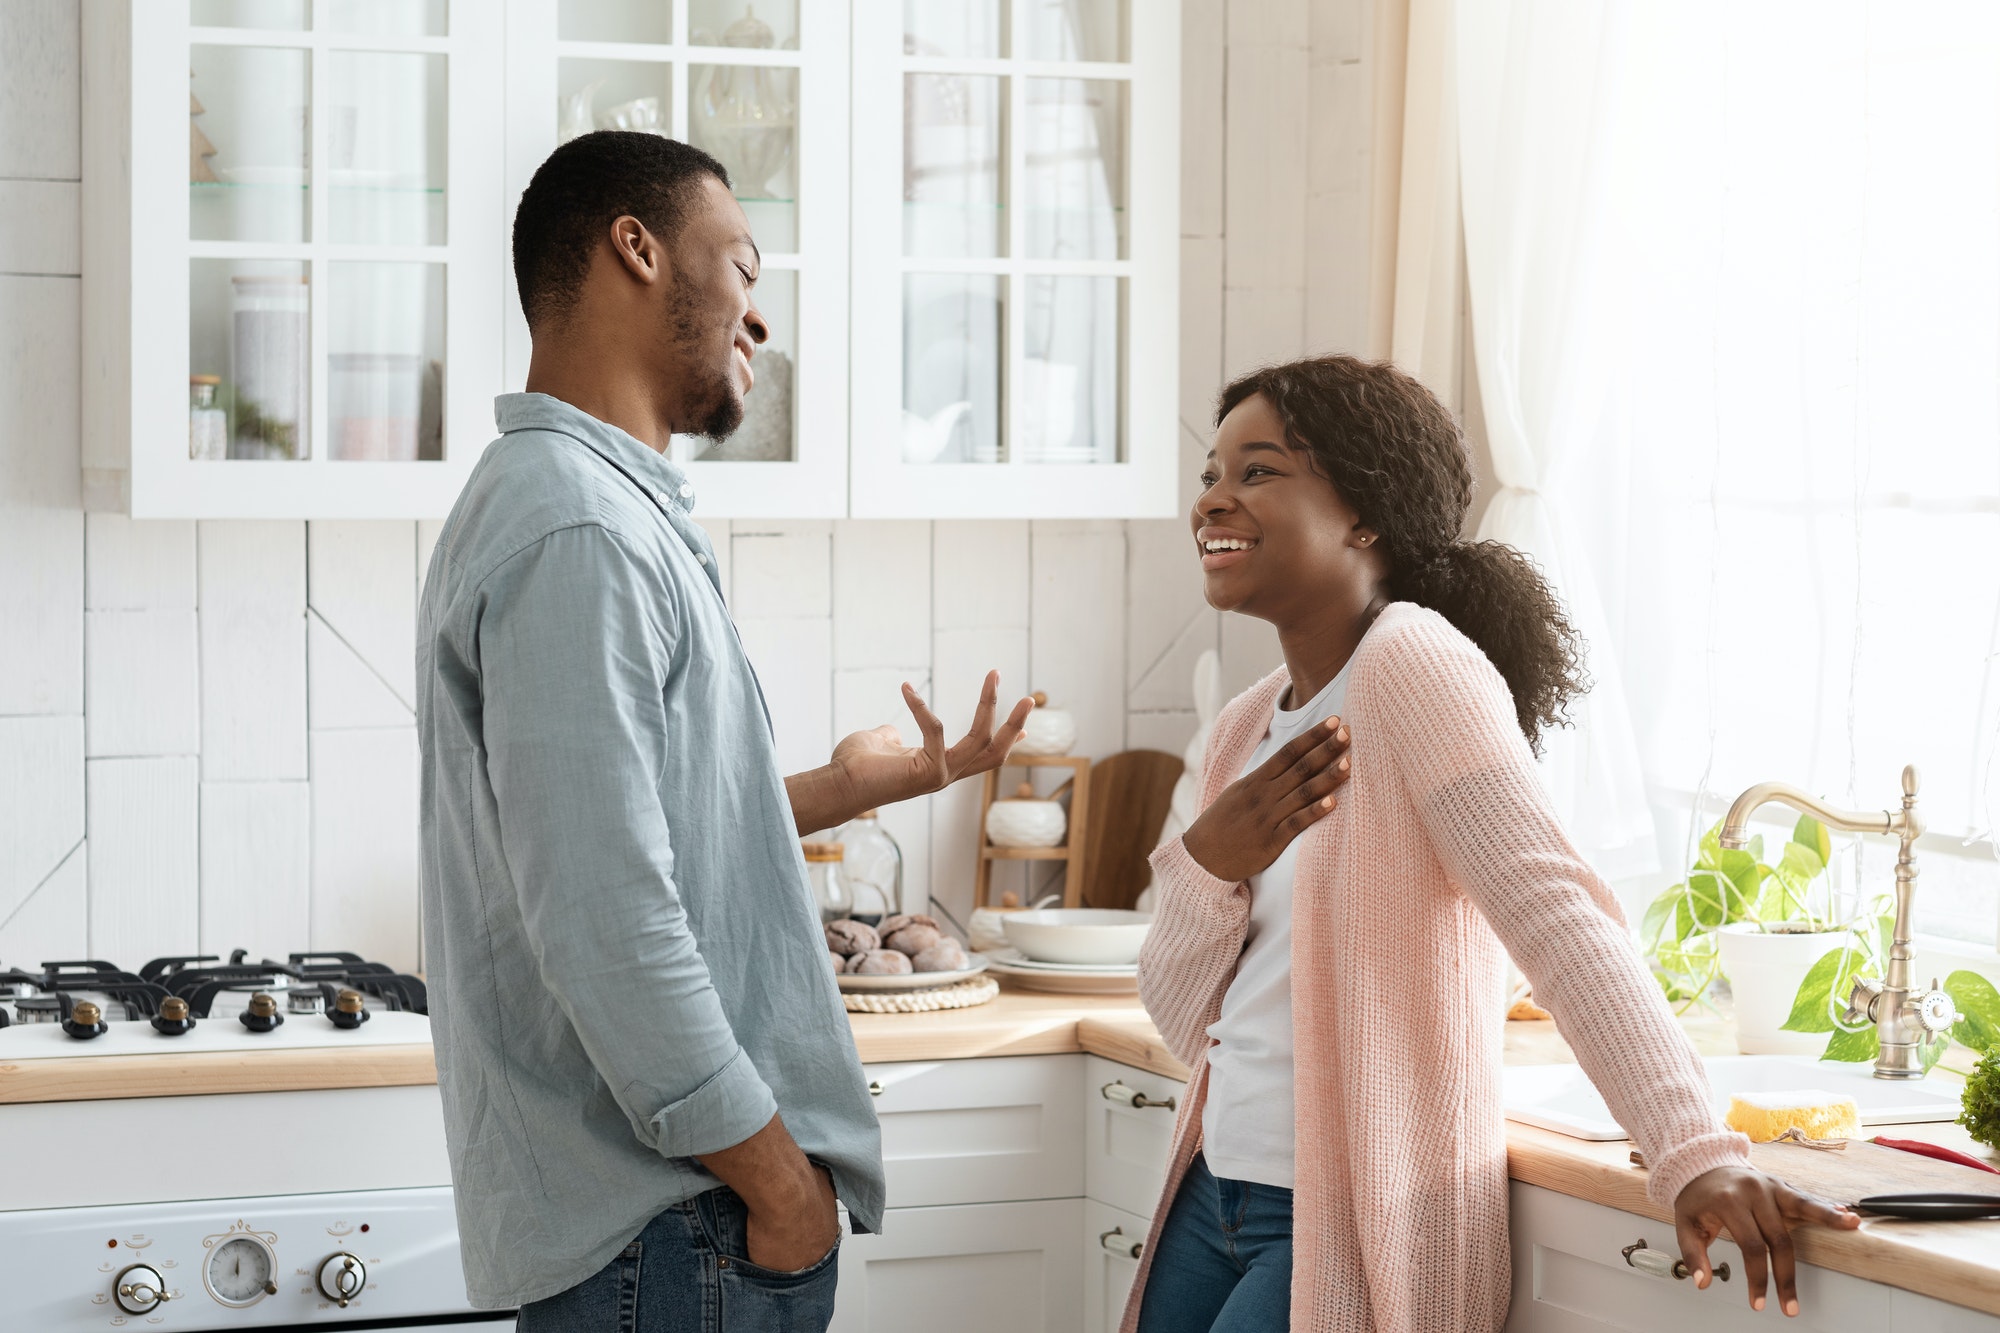 Communication Between Couples to rebuild trust